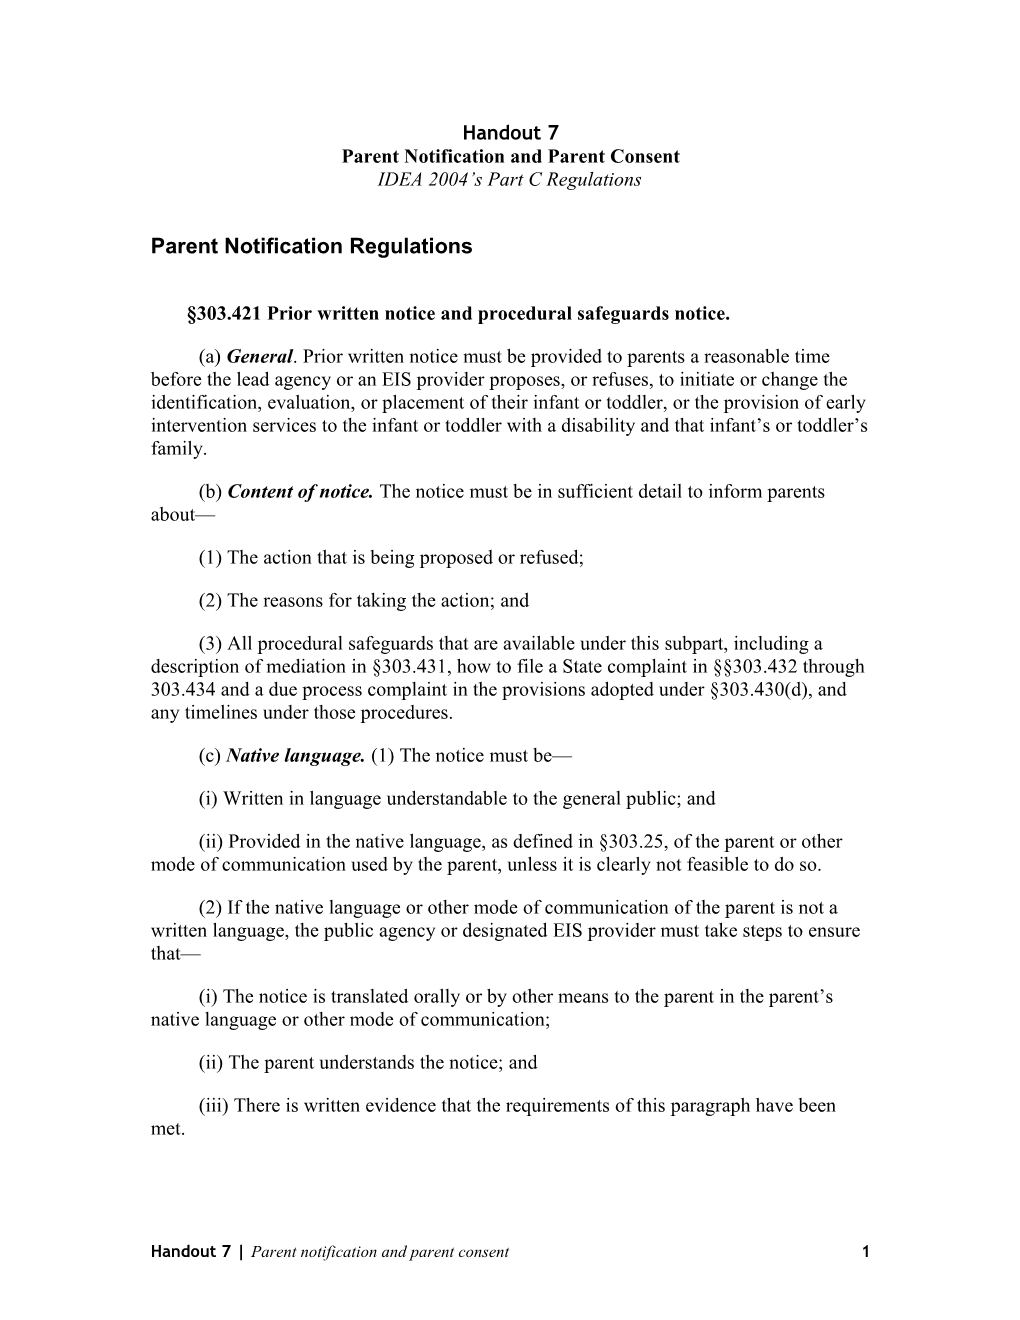 Parent Notification and Parent Consent